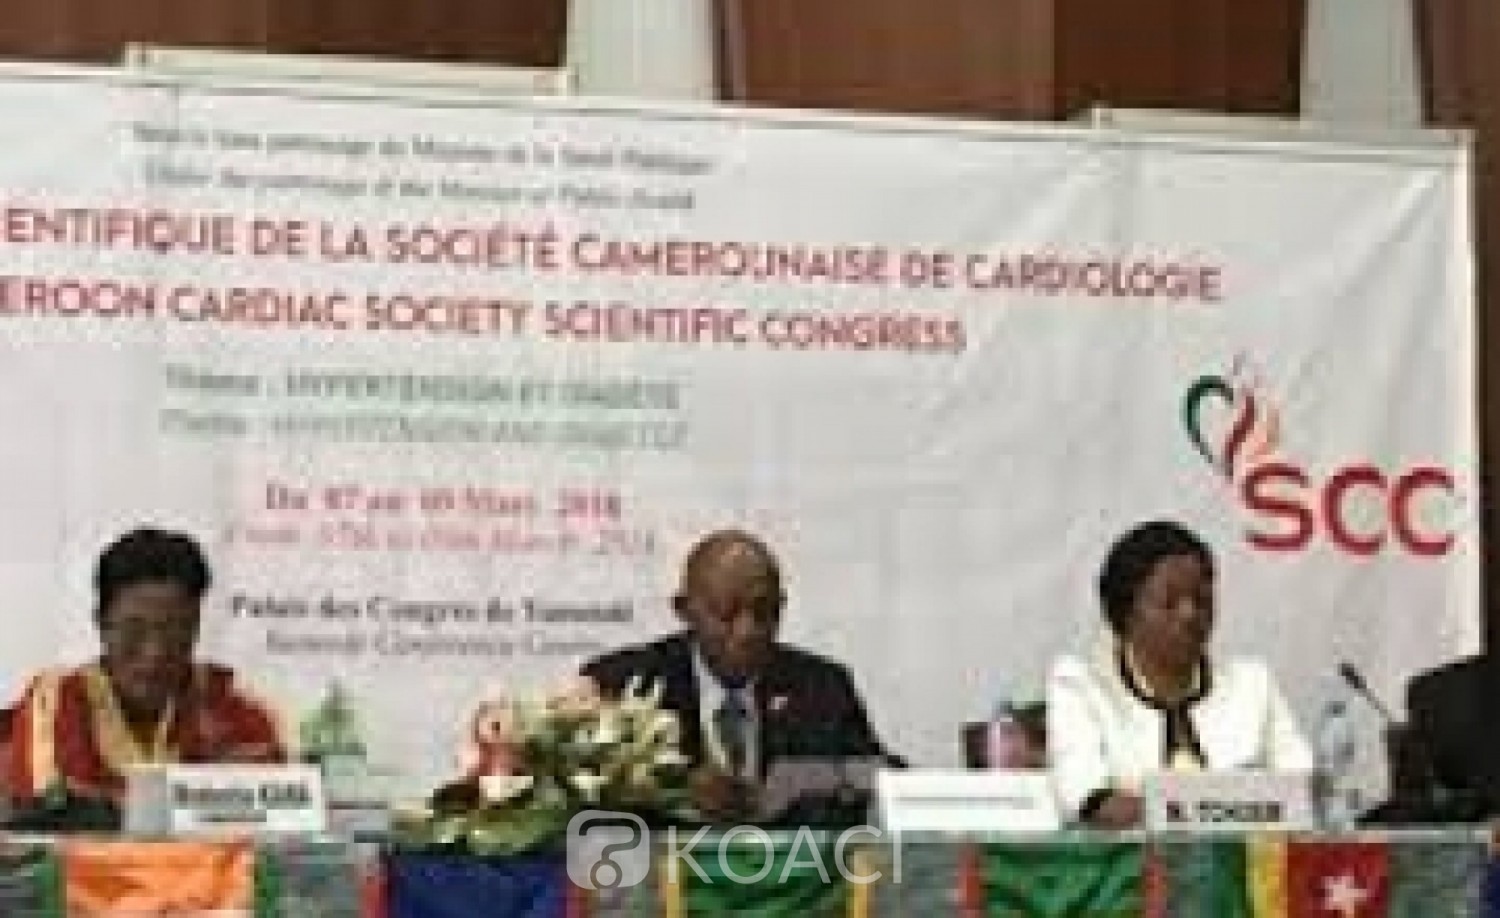 Cameroun  : Coronavirus, Yaoundé fait reporter le 12e congrès scientifique de la société camerounaise de Cardiologie